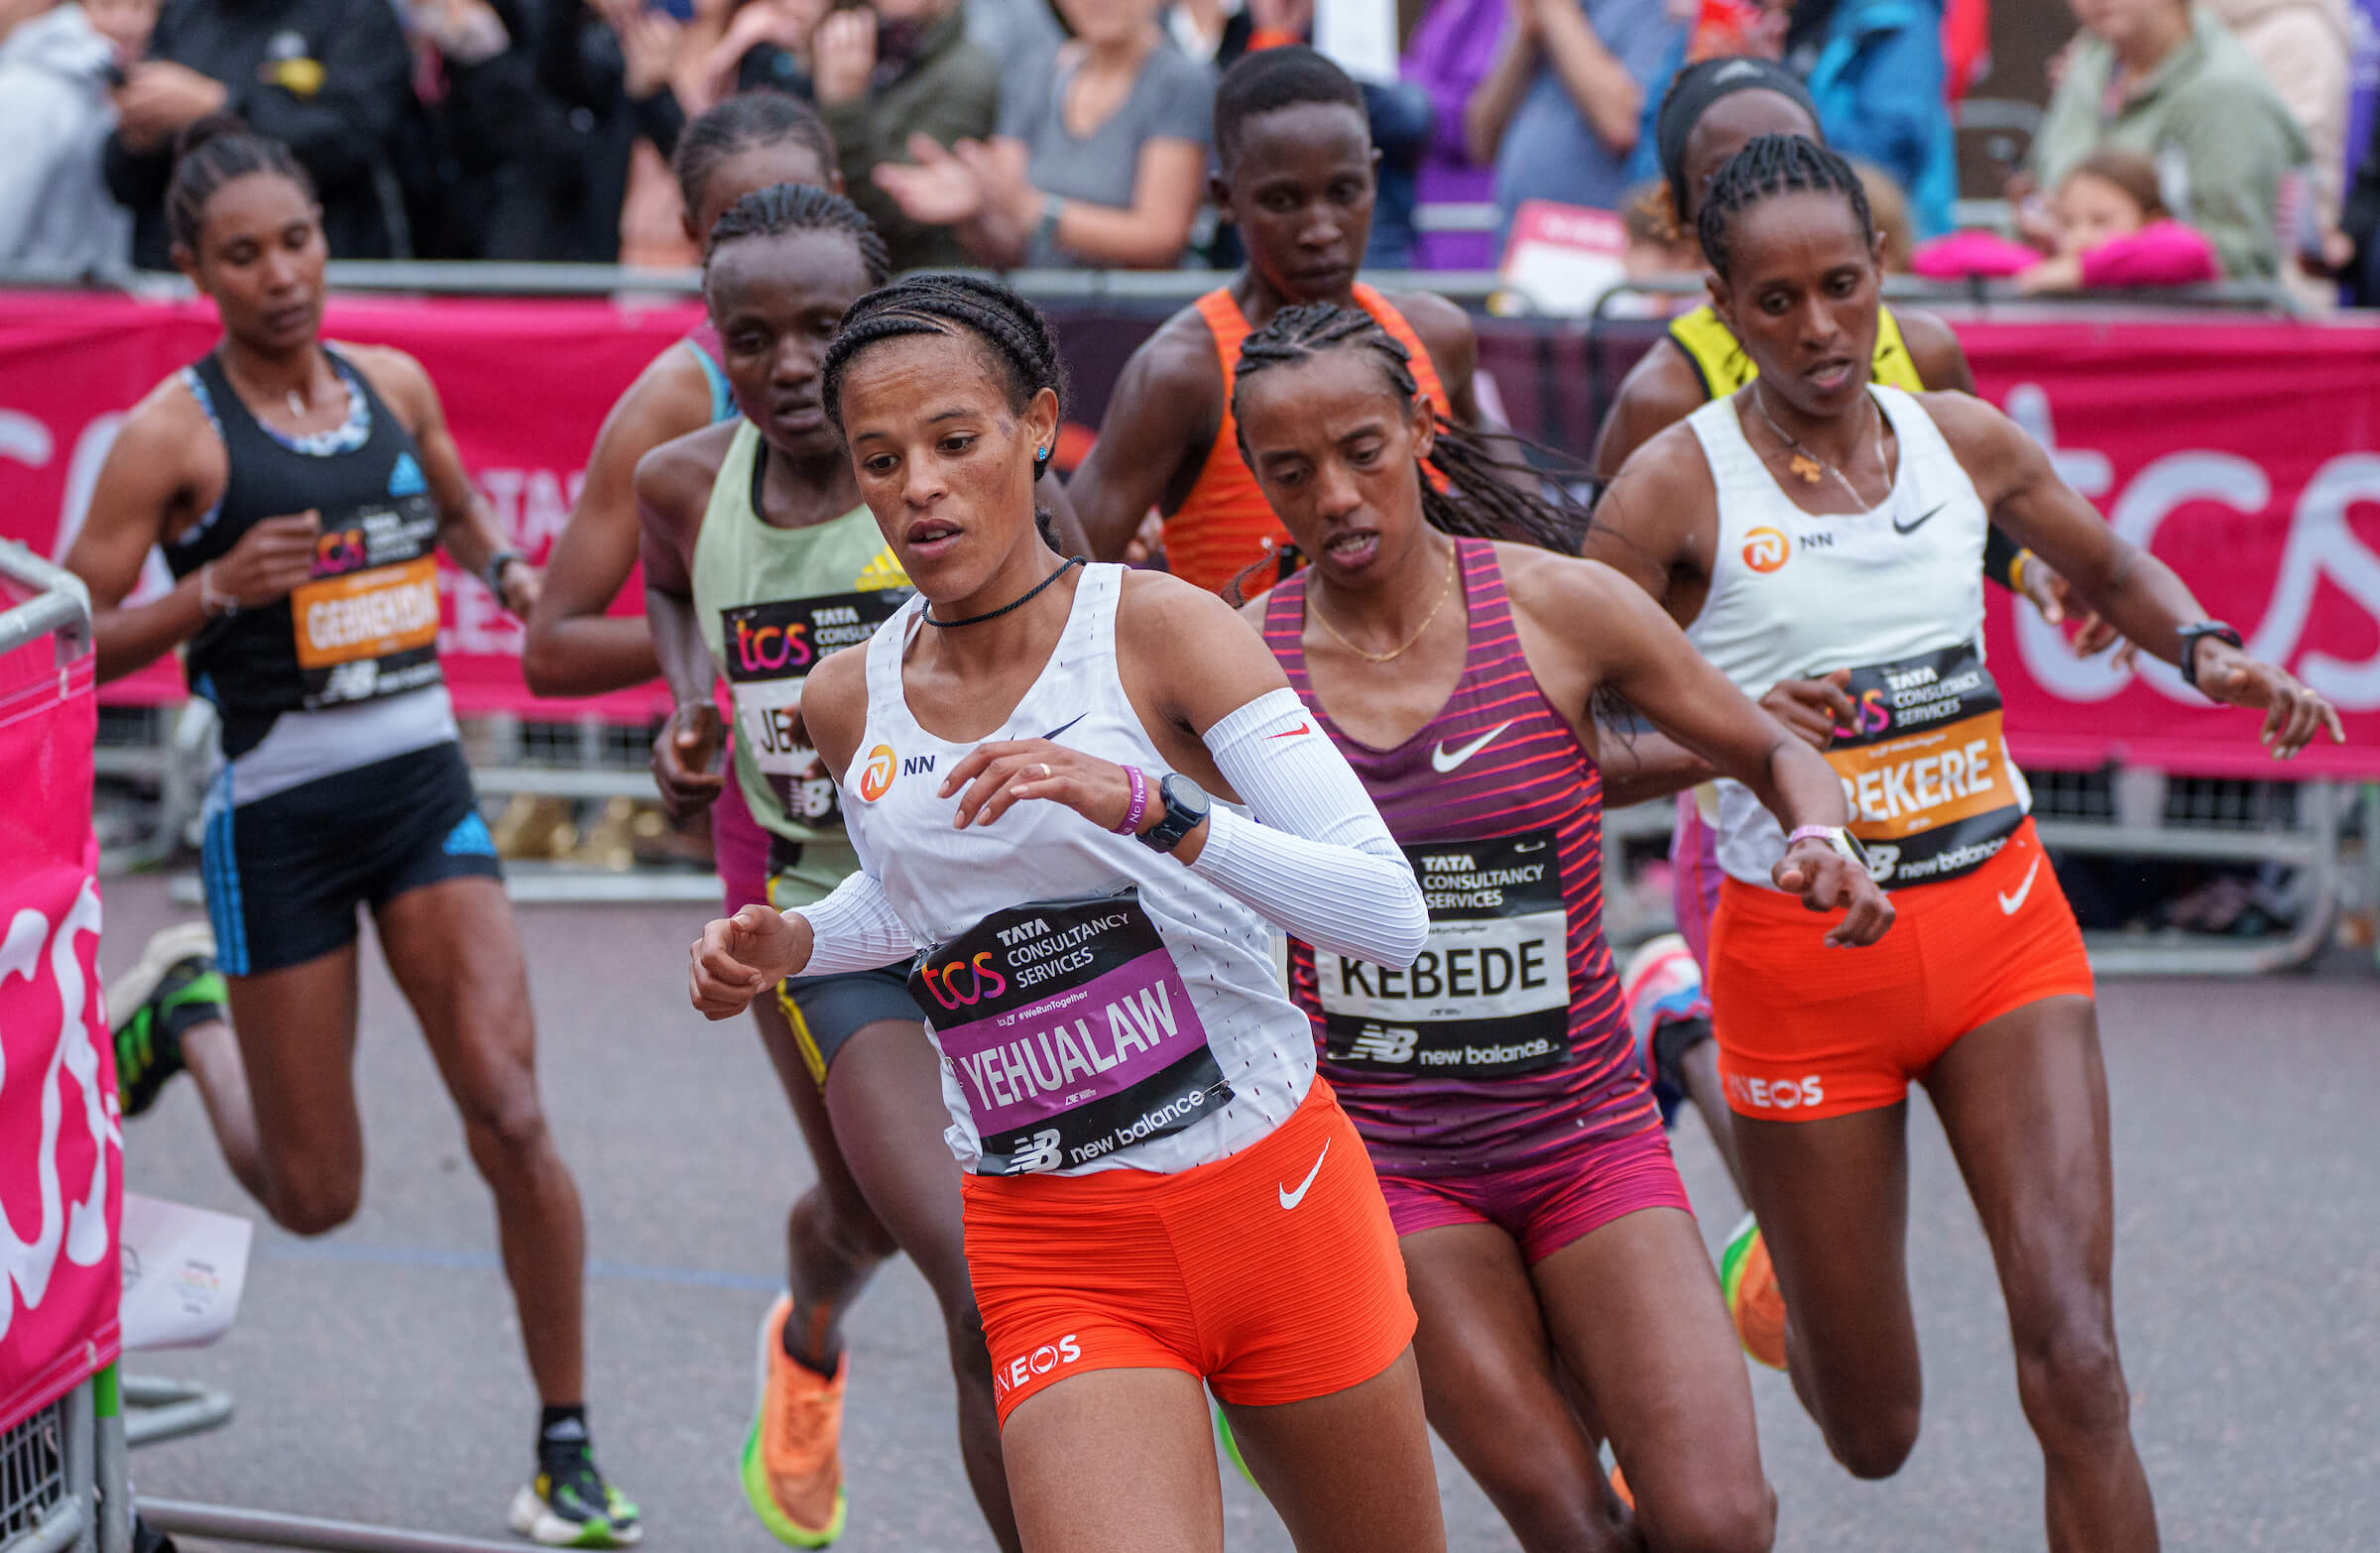 Elite women at the TCS London Marathon